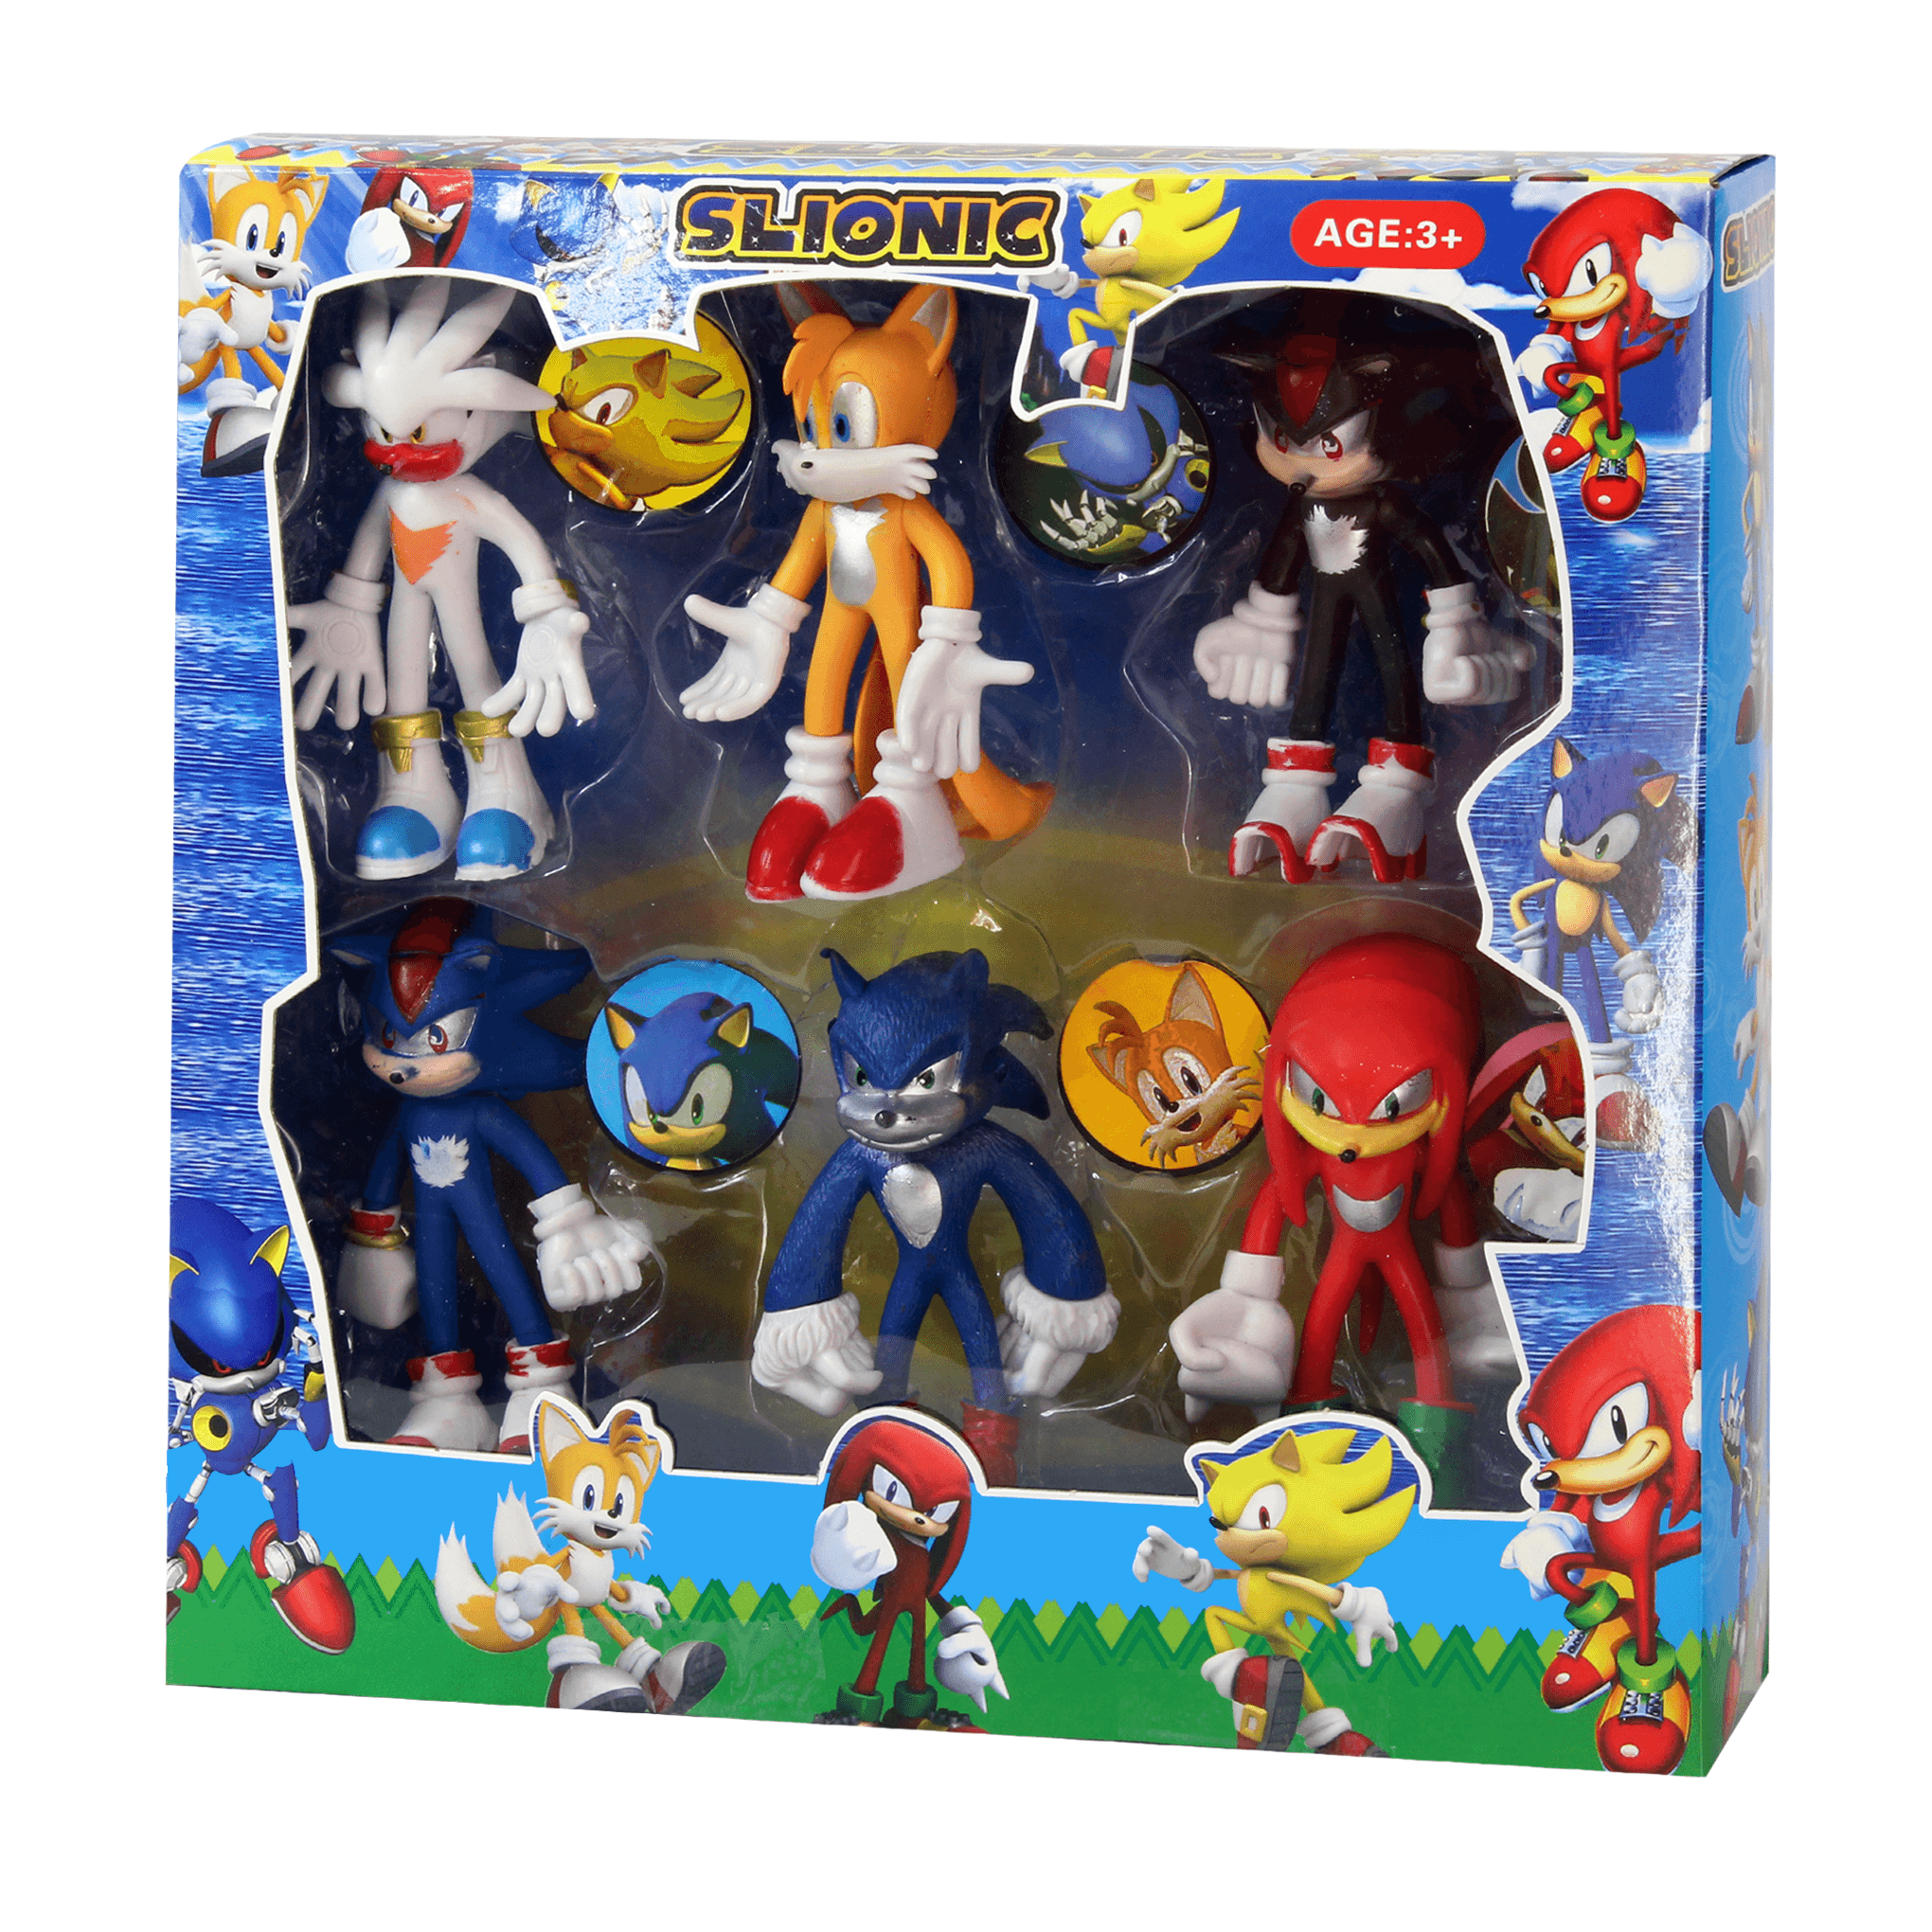 6 in 1 Sonic Action Figures Set Model C - BumbleToys - 5-7 Years, Action Figure, Action Figures, Boys, Sonic, Toy Land